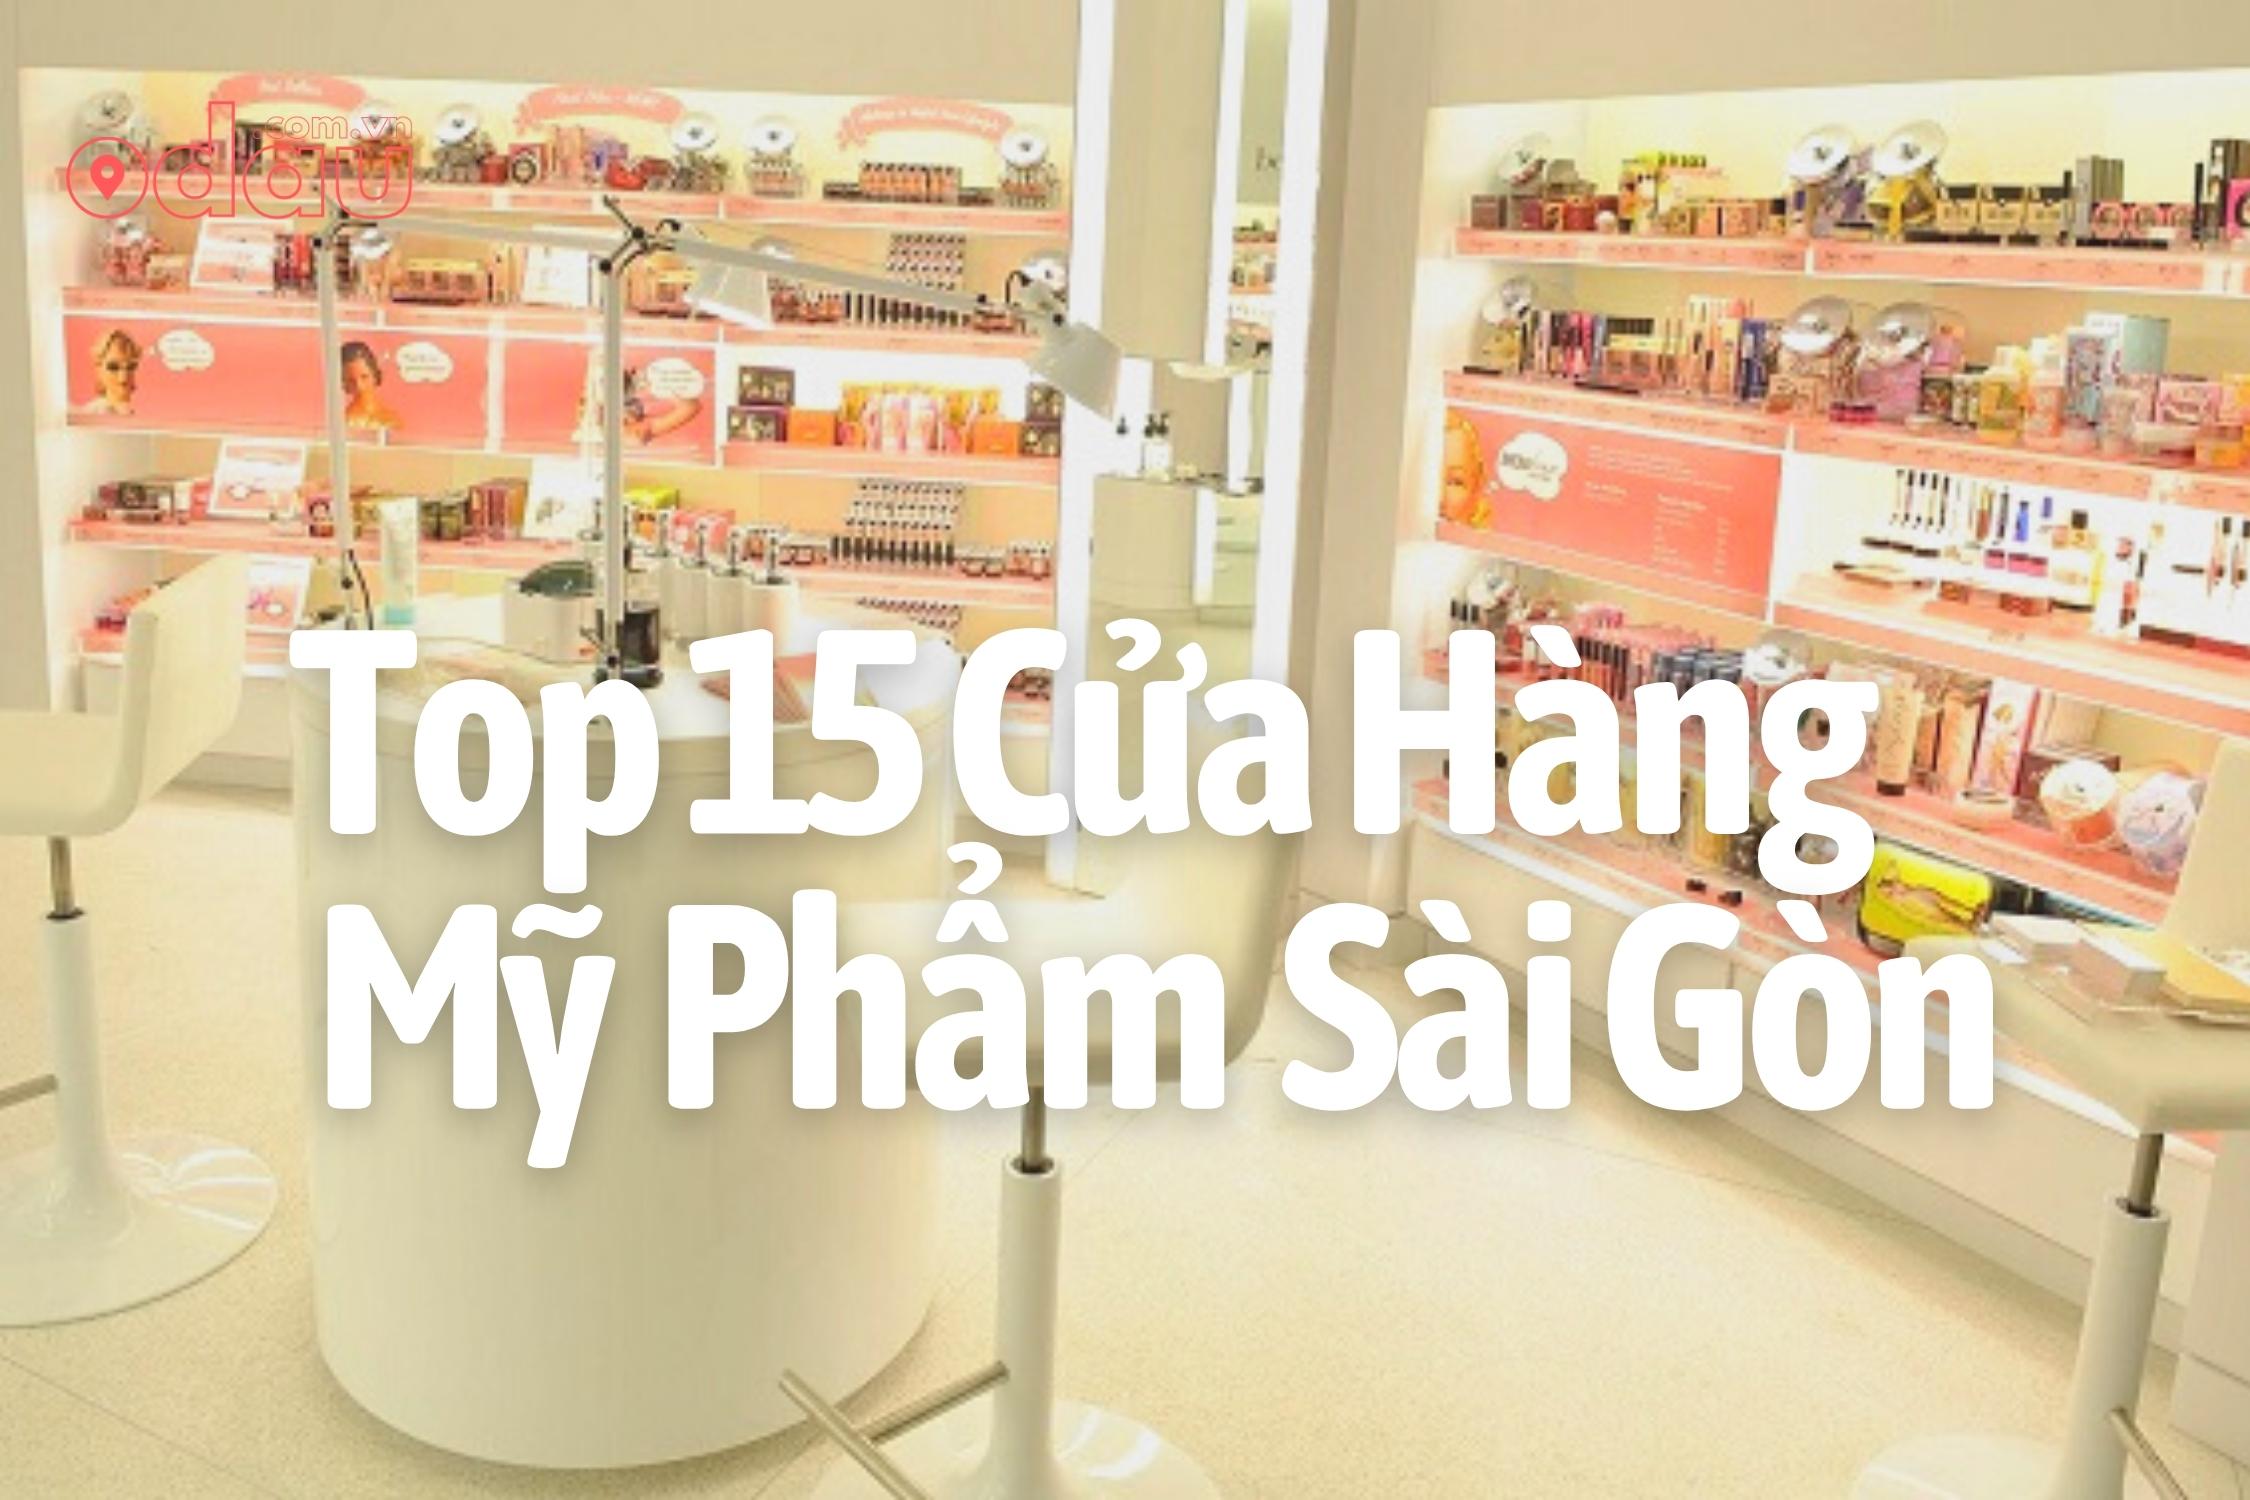 Top 15 Cua Hang My Pham Sai Gon